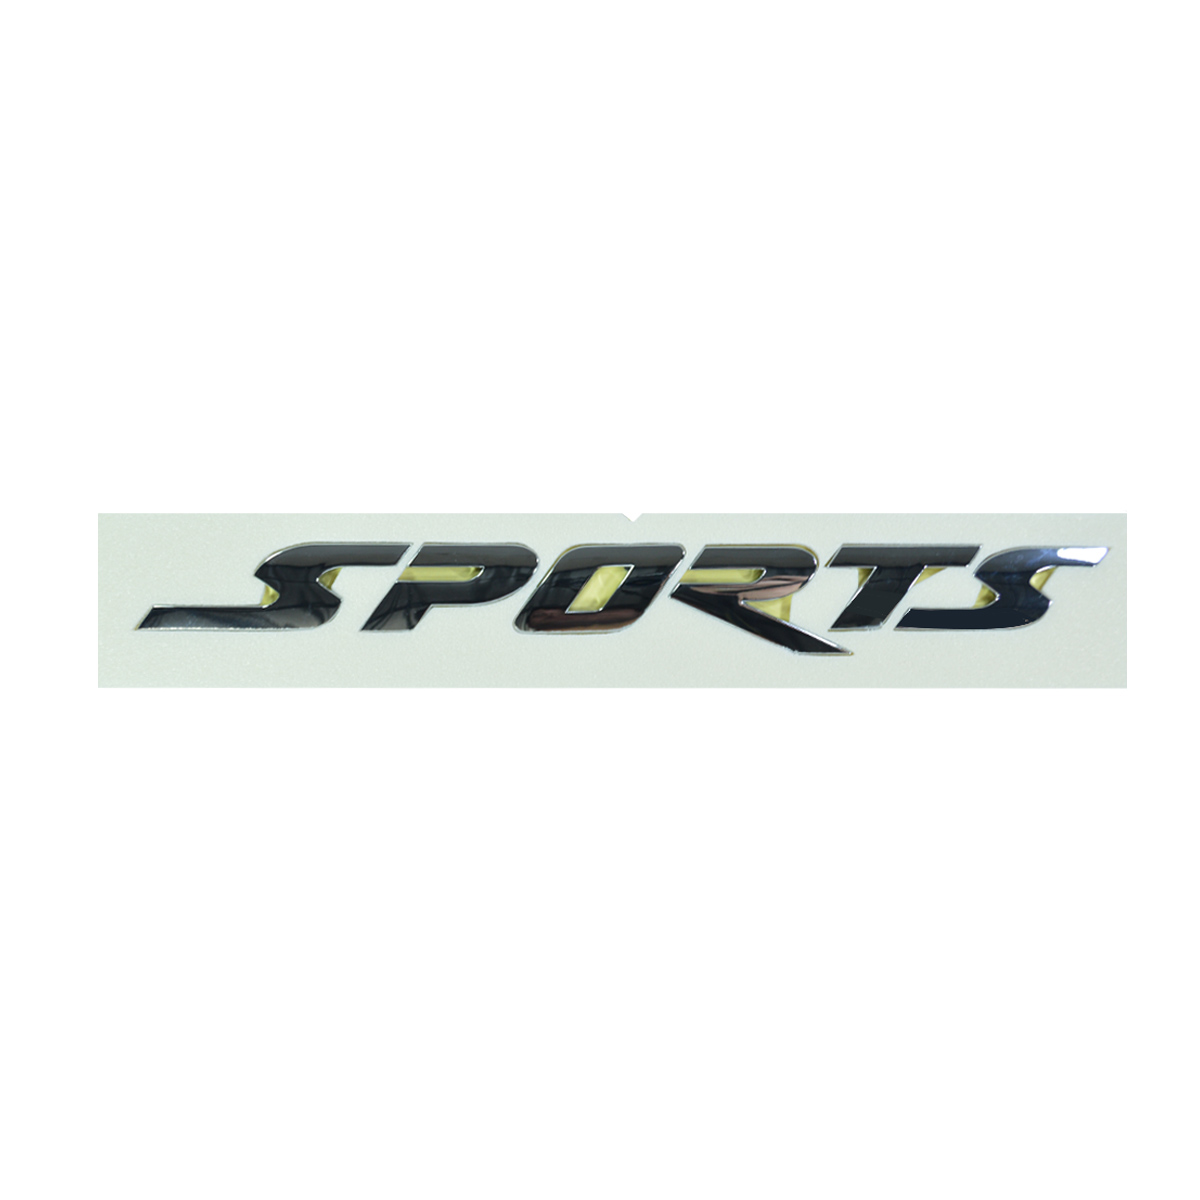 Emblema Tampa Traseira Sports Ssangyong Actyon Sports 2.0 após 2008 Original